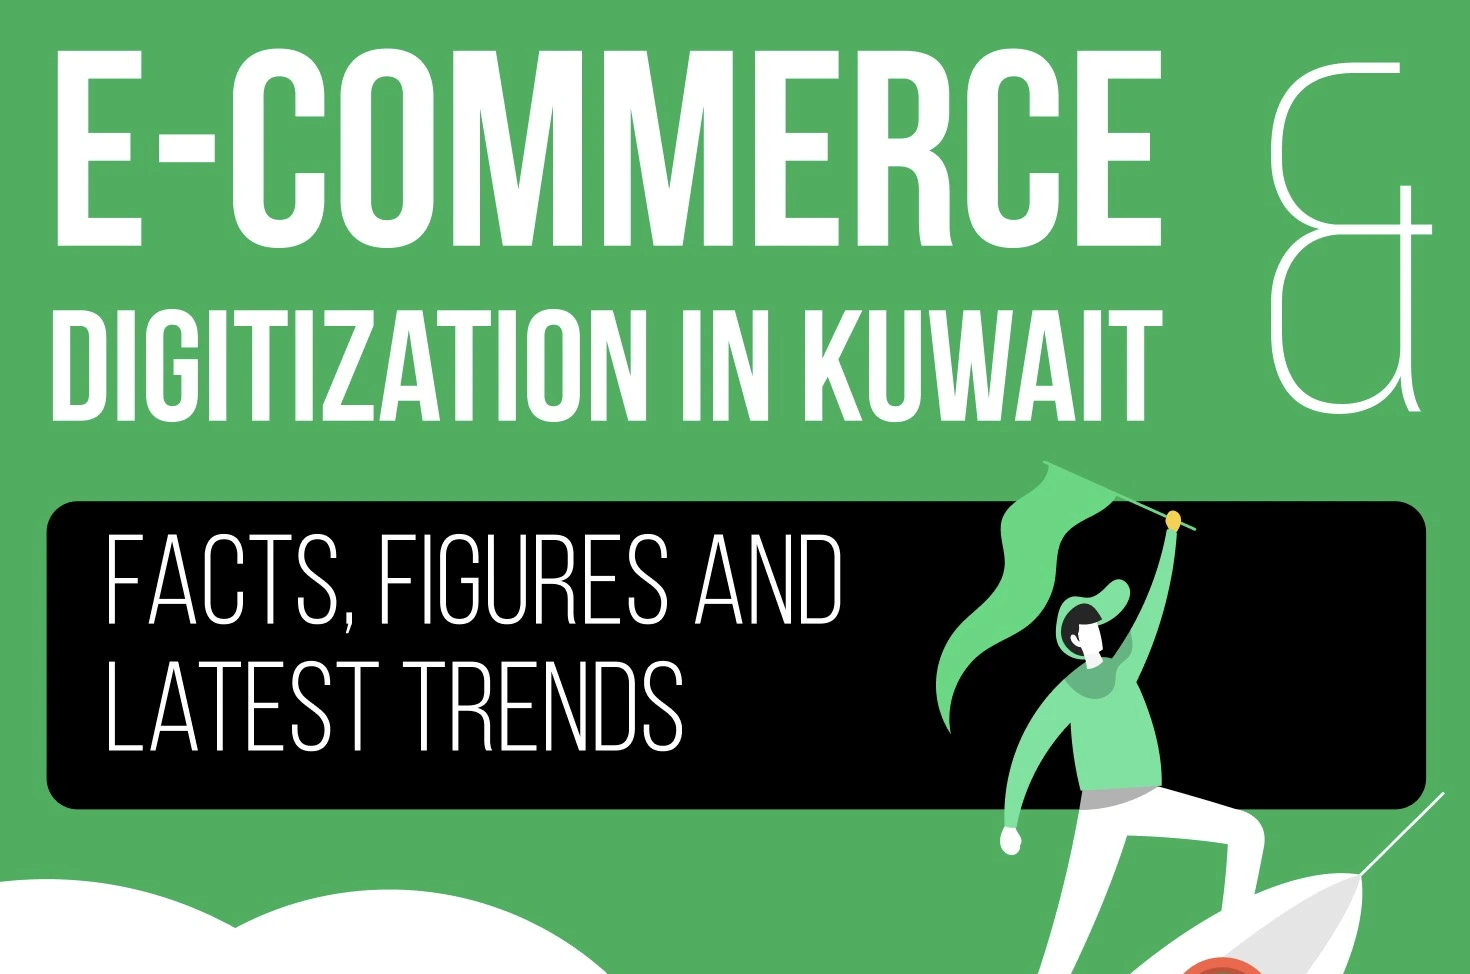 ecommerce_digitization_in_kuwait1